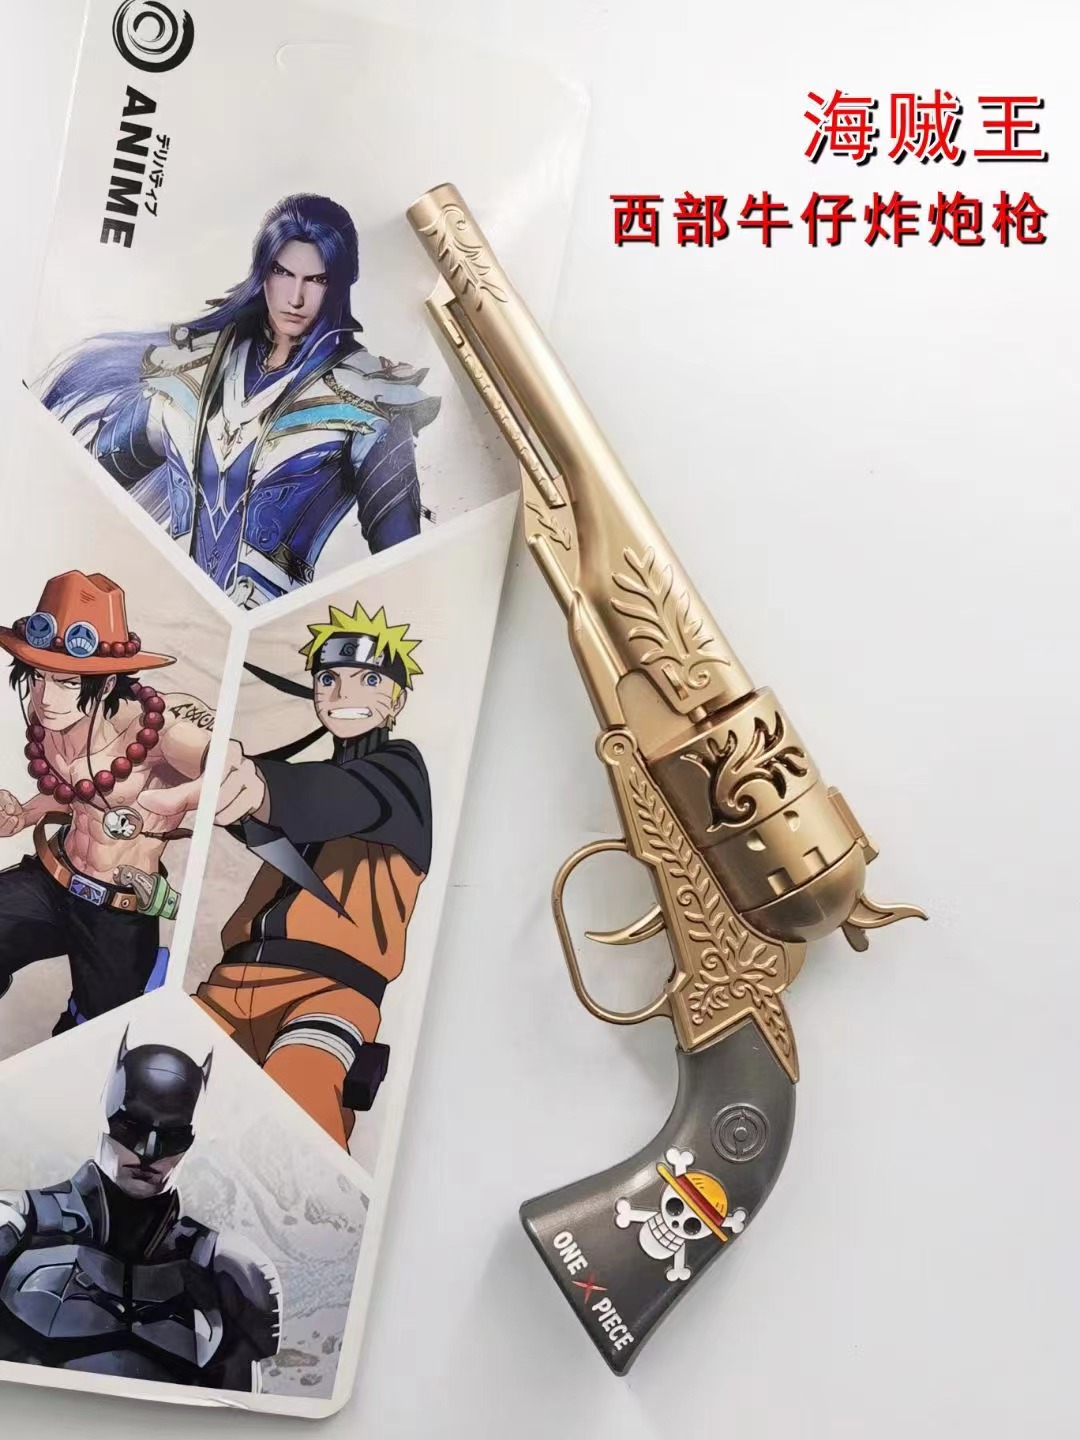 One Piece anime cowboy smashing gun toy